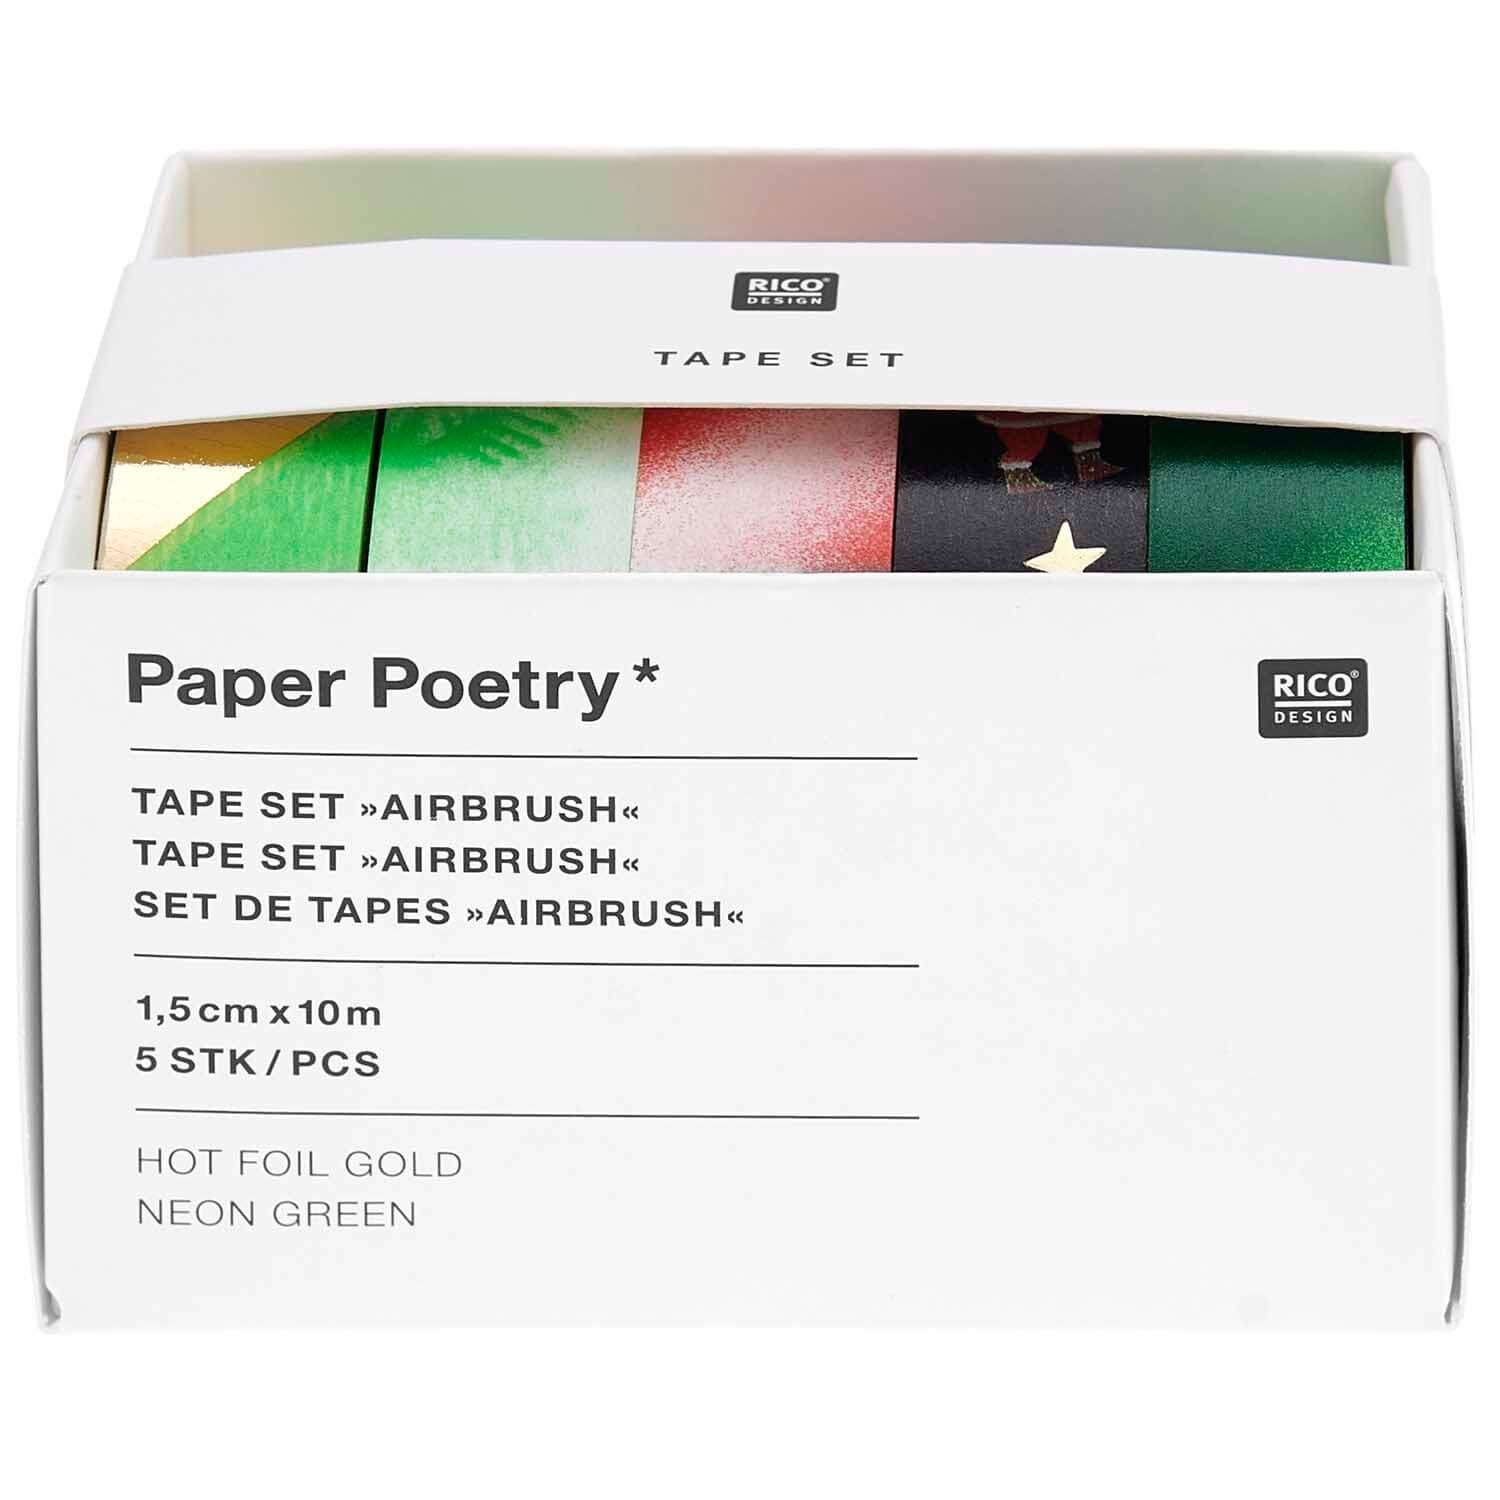 5teilig 10m Klebeband Airbrush Paper Poetry Design Tape 1,5cm Set Rico